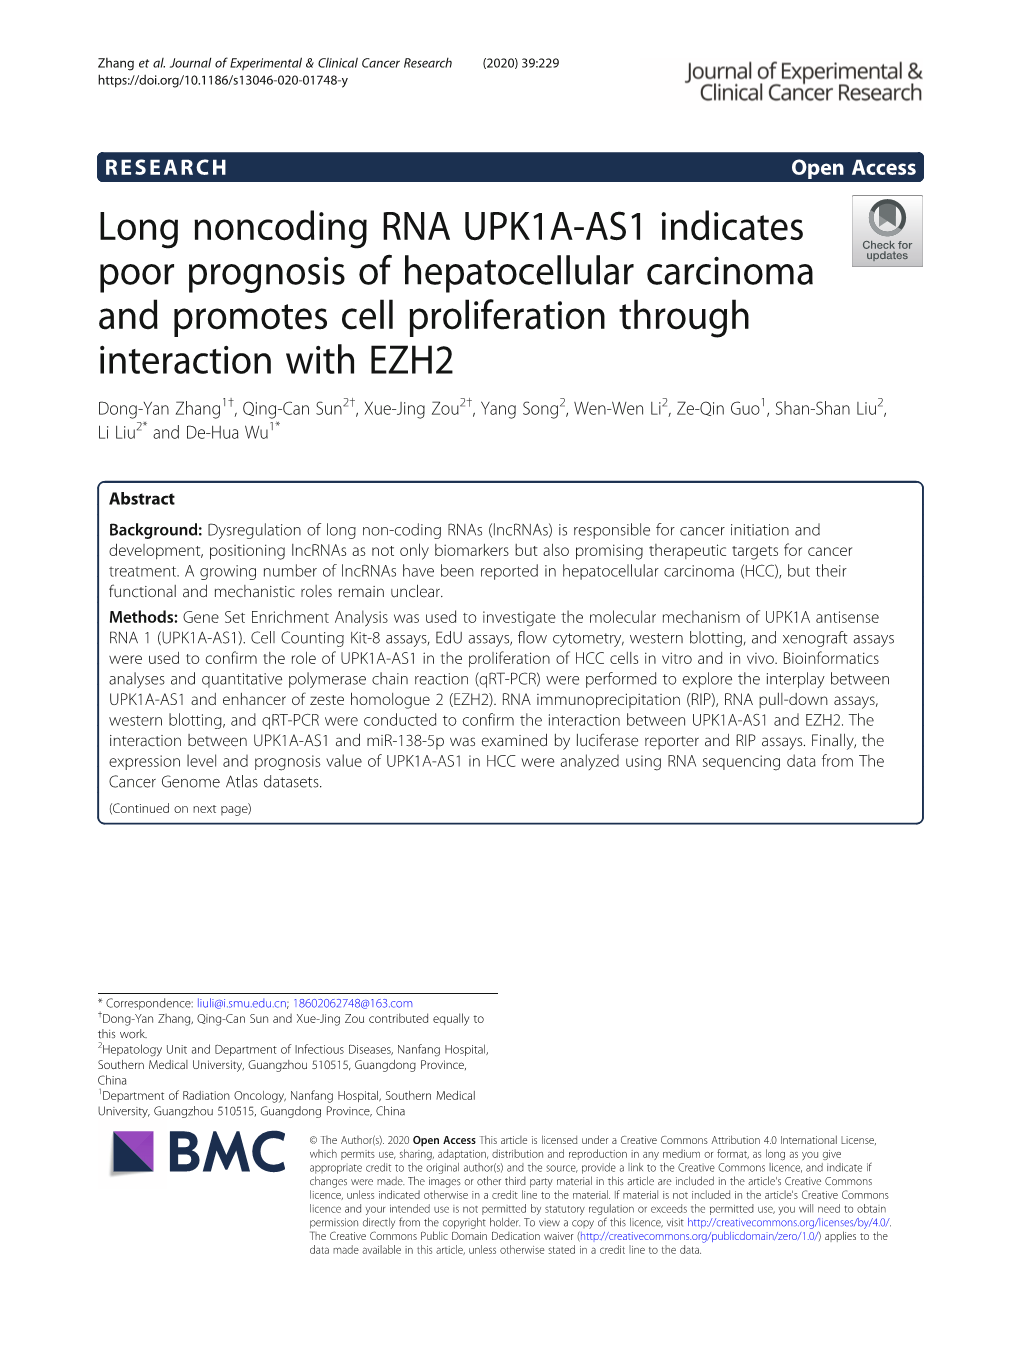 Long Noncoding RNA UPK1A-AS1 Indicates Poor Prognosis Of